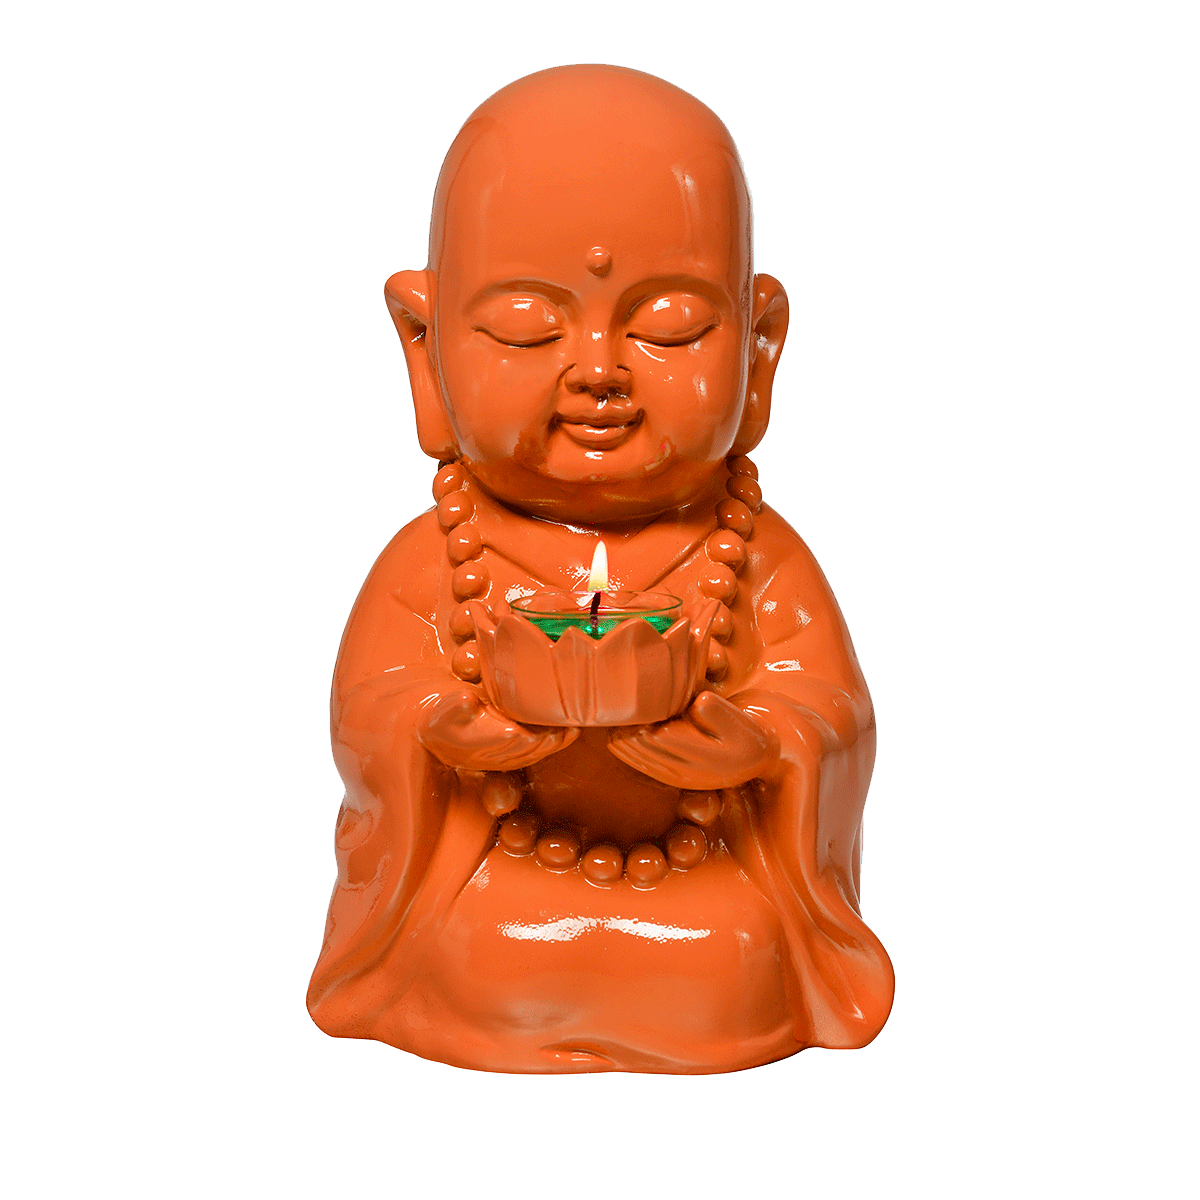 Happy Buddha Tealight Holder - Orange - PartyLite US